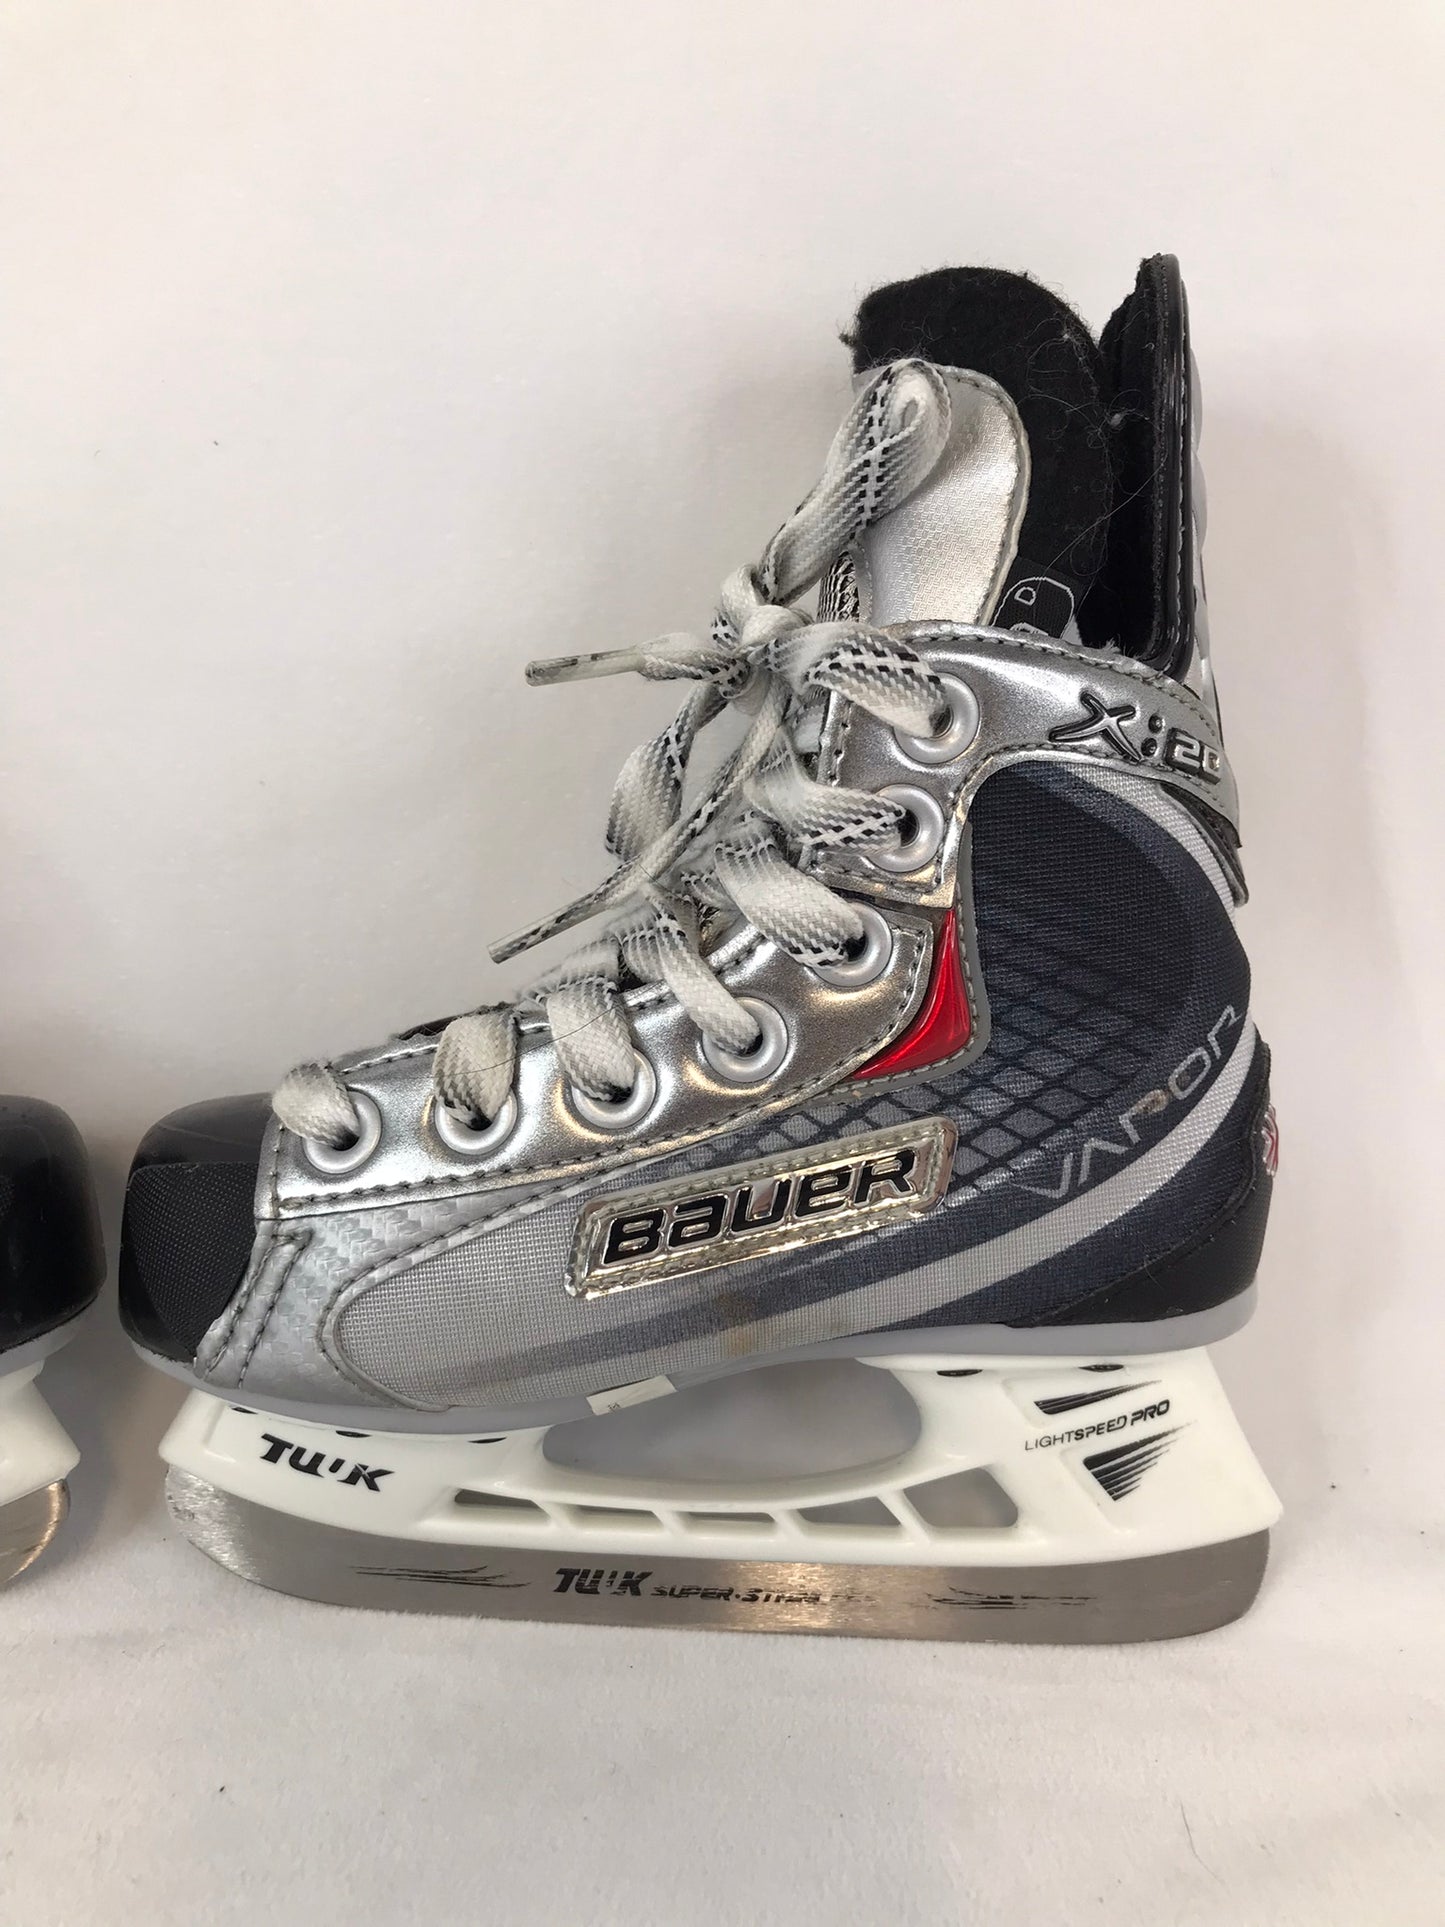 Hockey Skates Child Size 10 Shoe Size Bauer Vapor X.20 New Demo Model